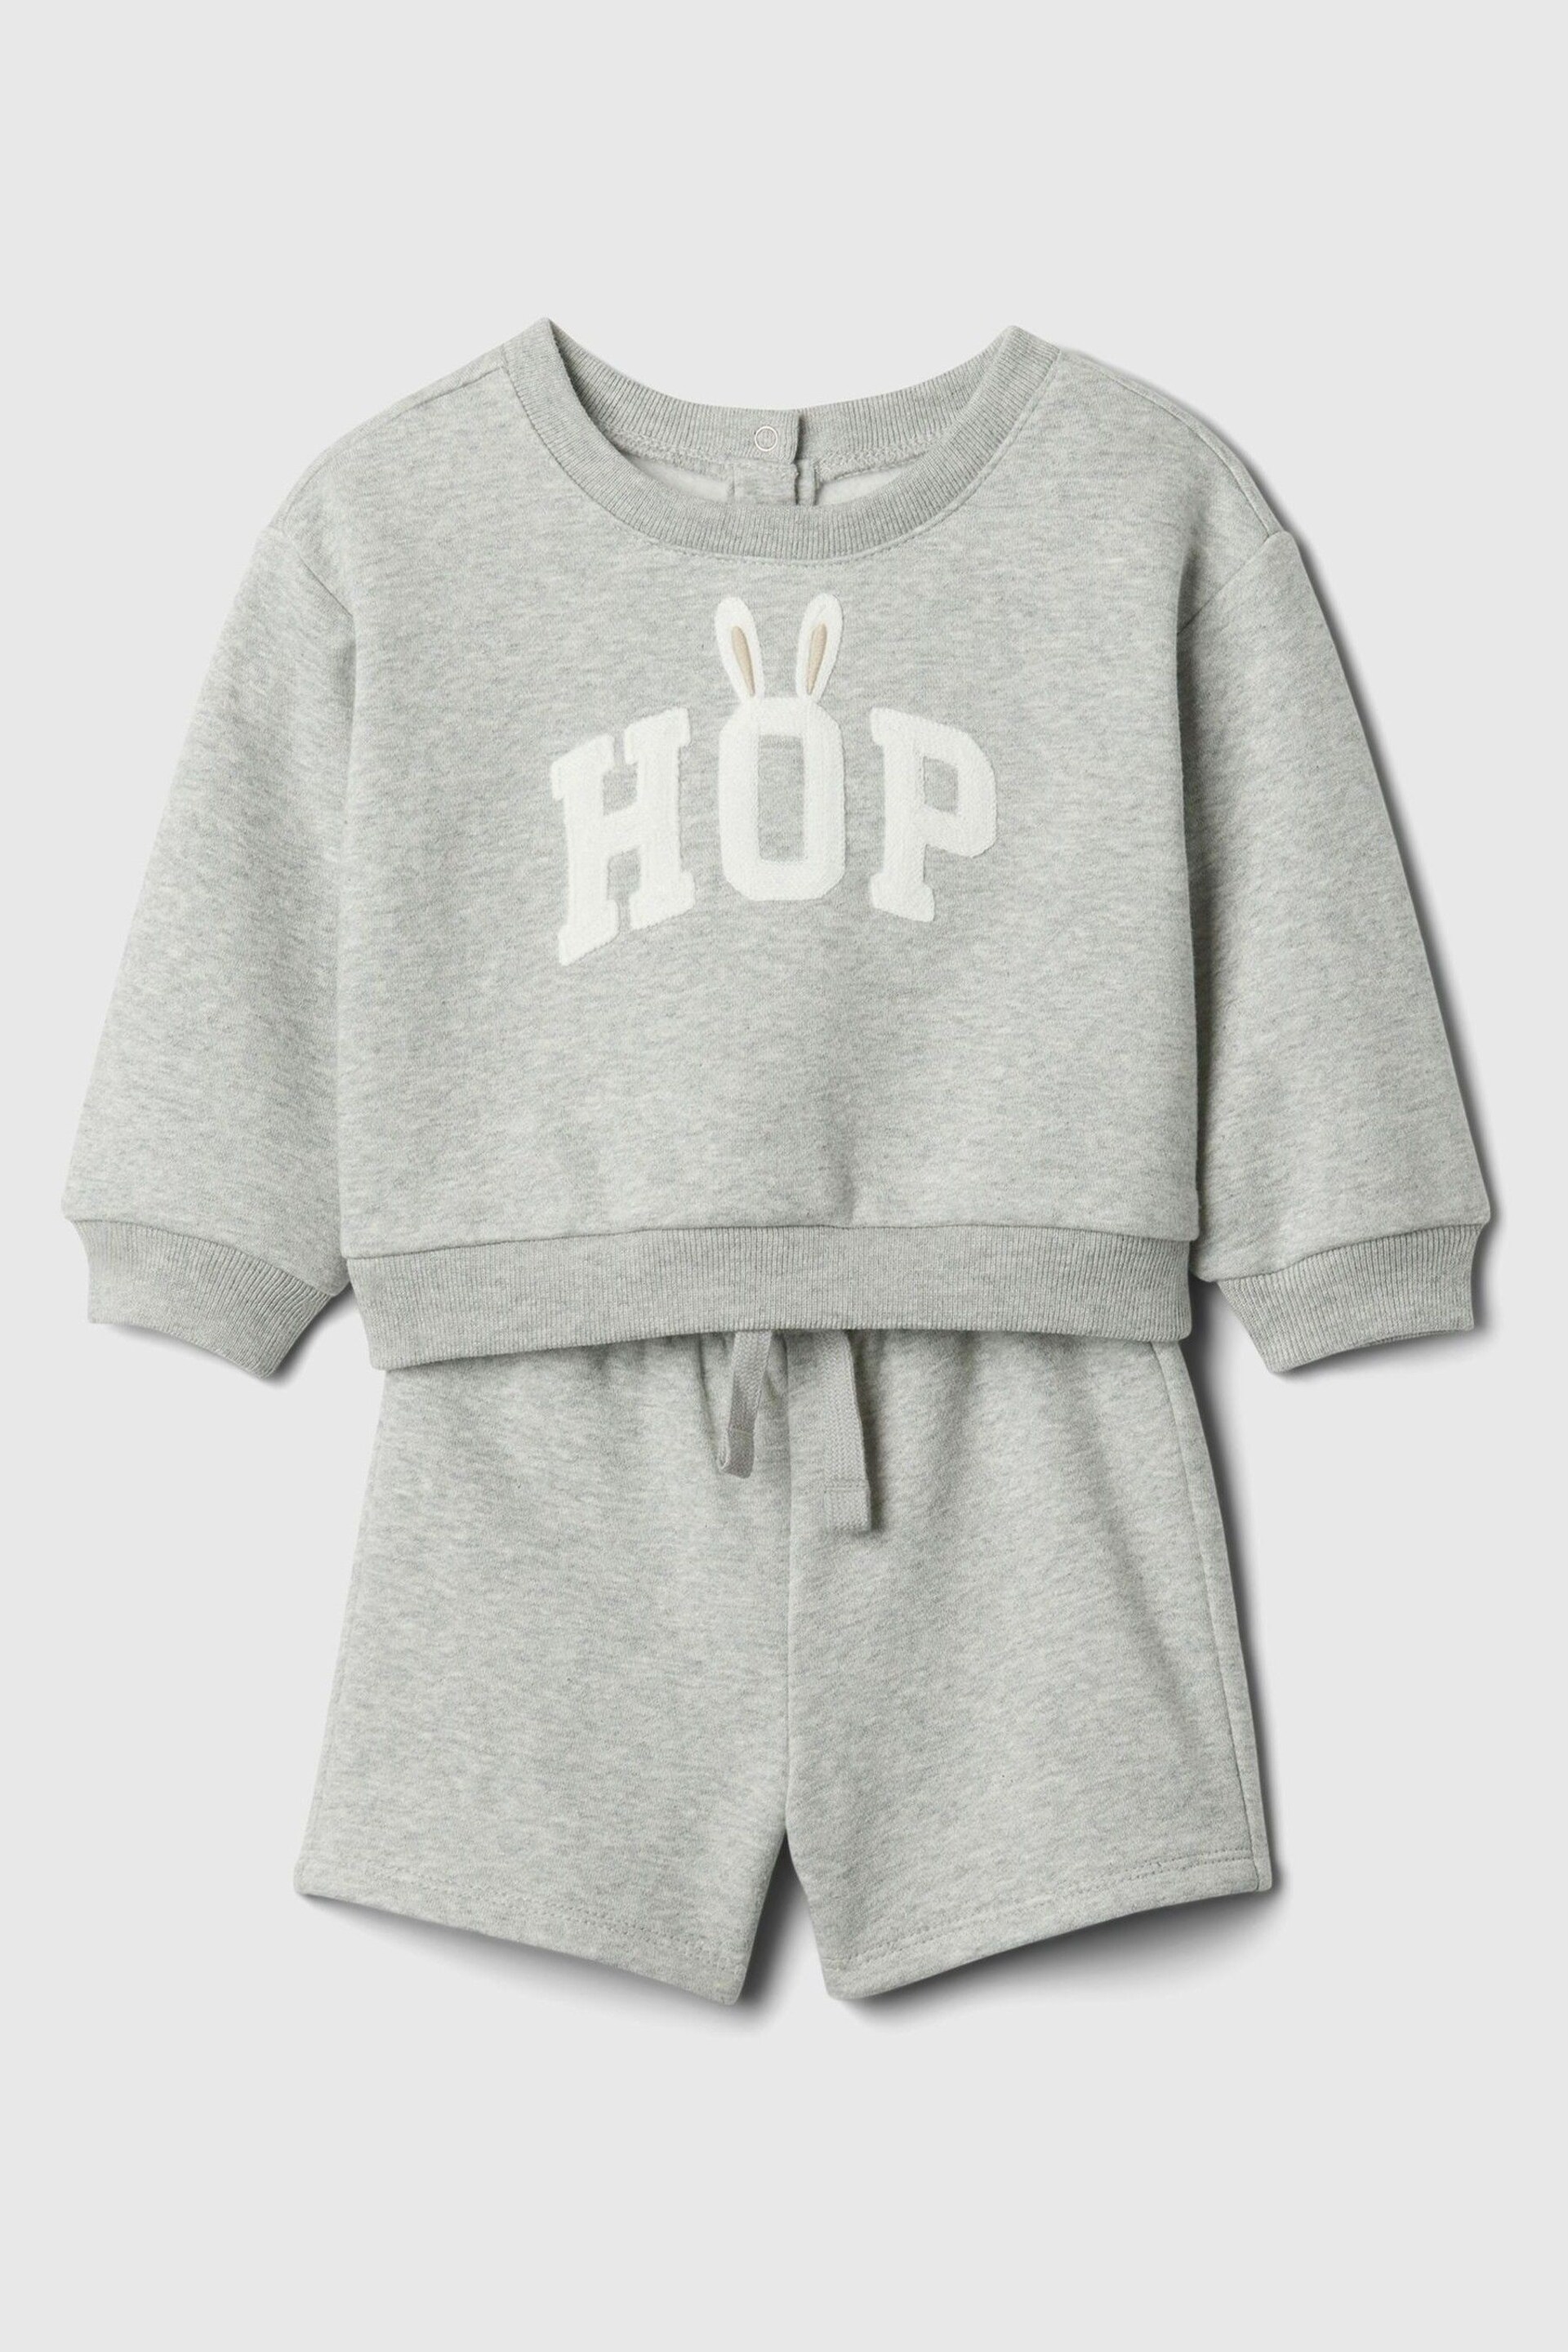 Gap Grey Graphic Baby Sweatshirt and Shorts Set (Newborn-24mths) - Image 1 of 2